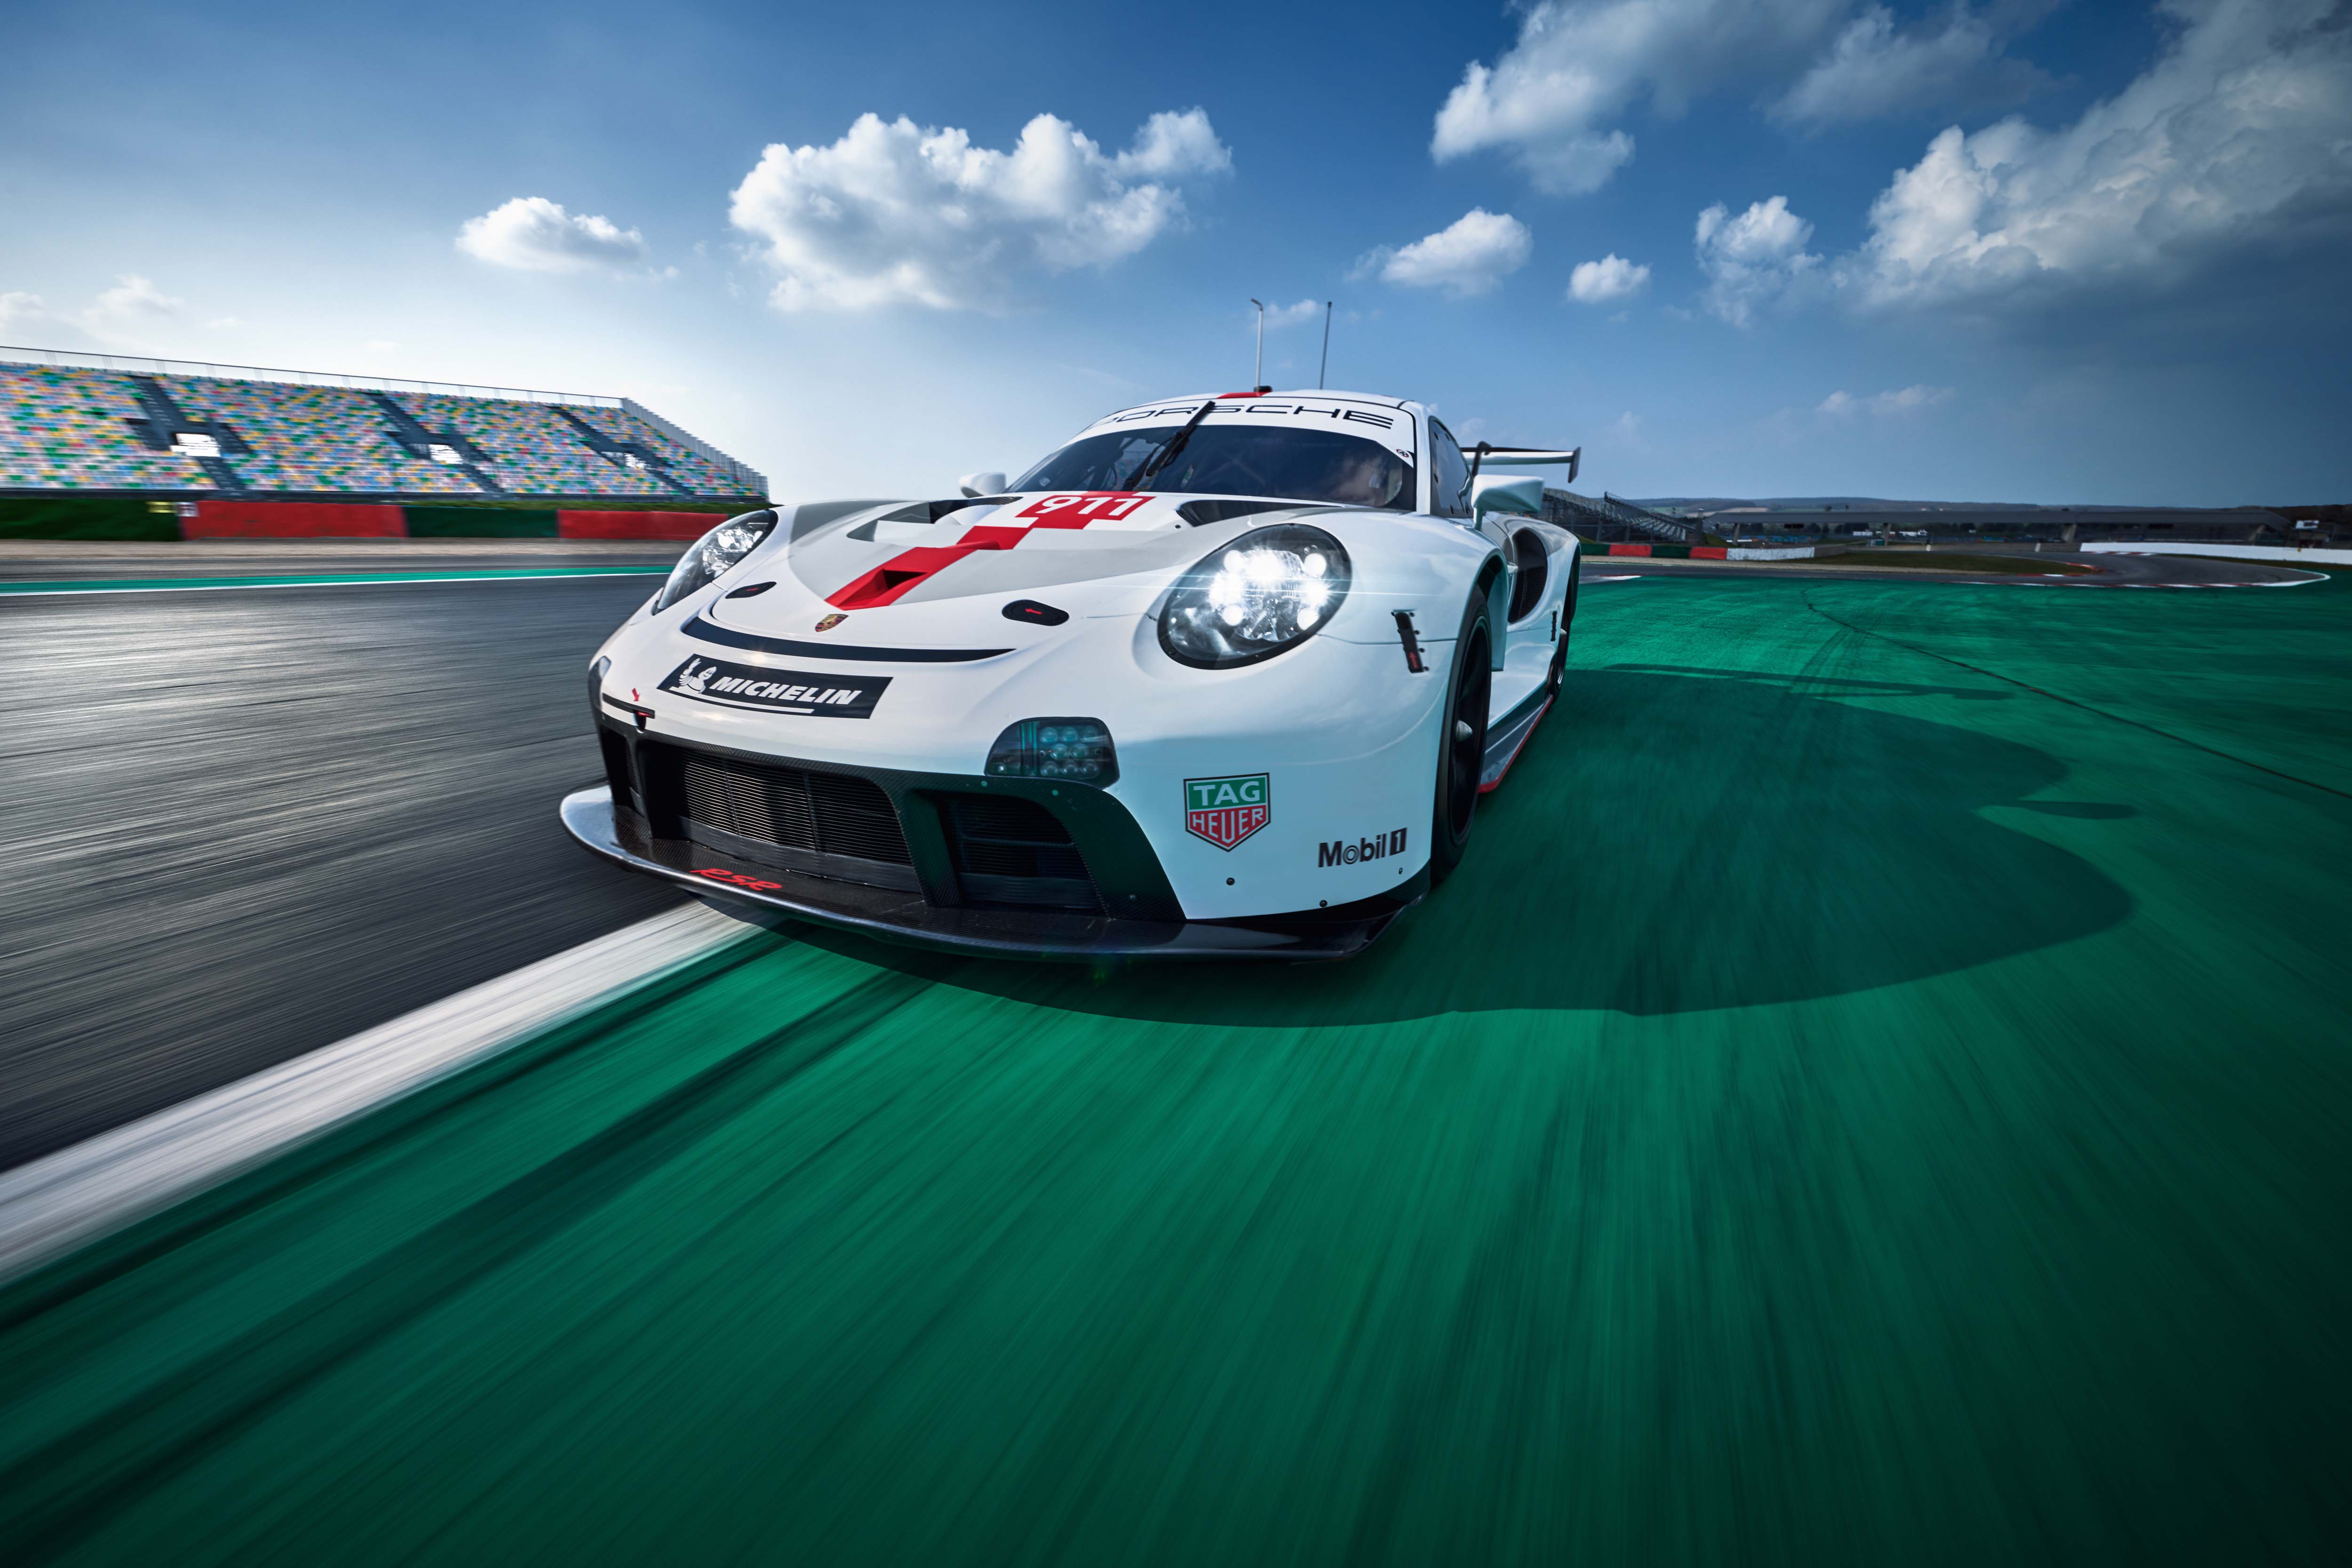 La Cote Des Montres Tag Heuer Porsche Enter The Strongest Ever Partnership Between A Car Manufacturer And A Watch Brand